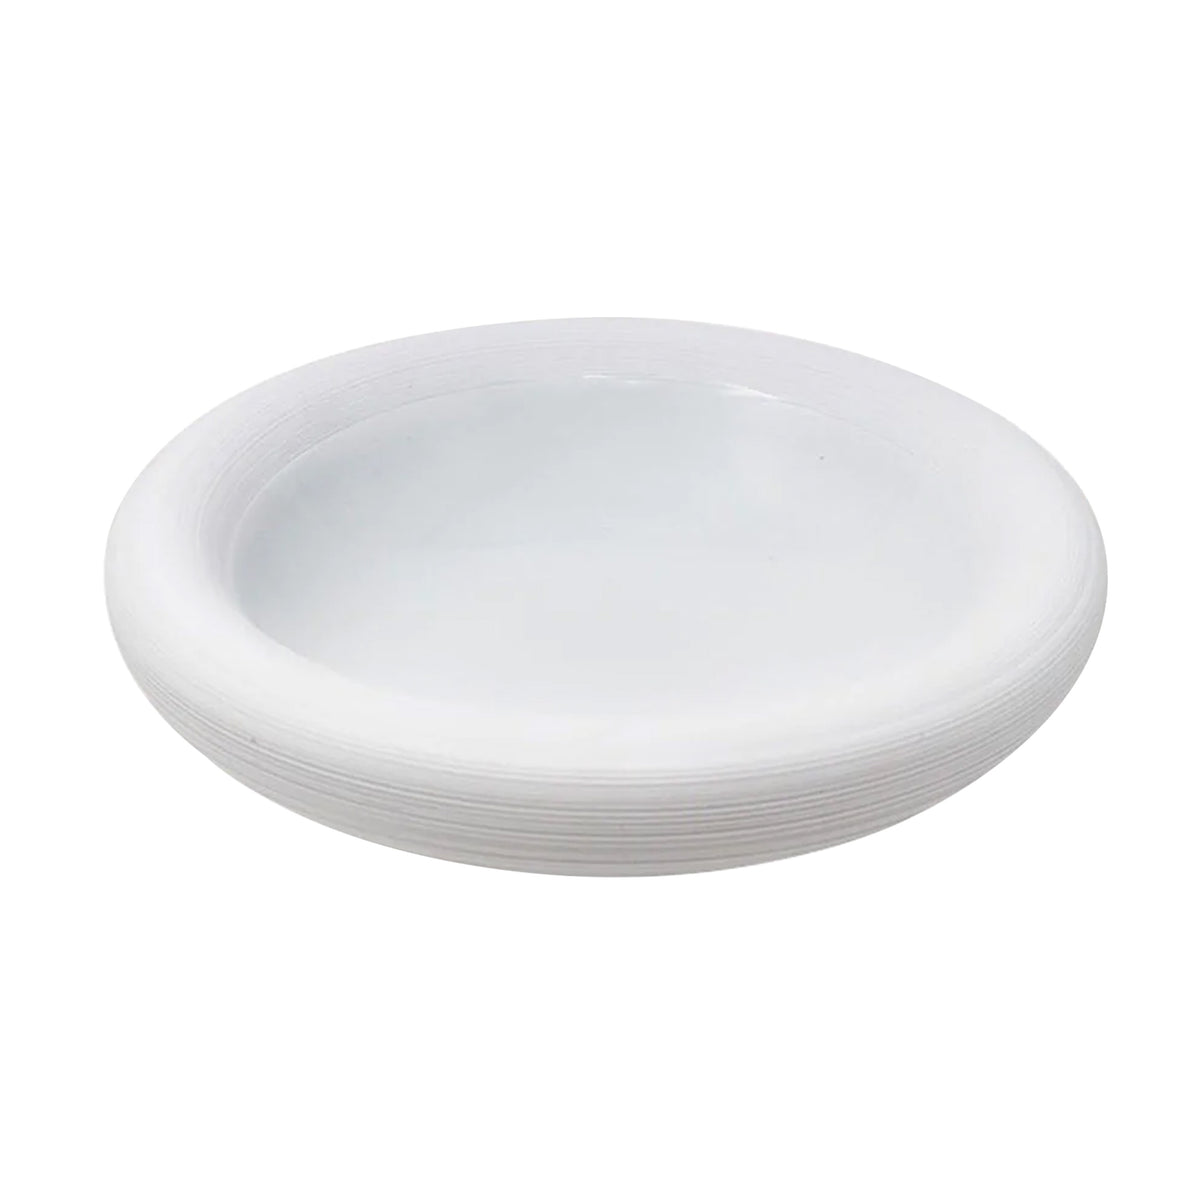 HEMISPHERE White Satin - Bubble soup plate